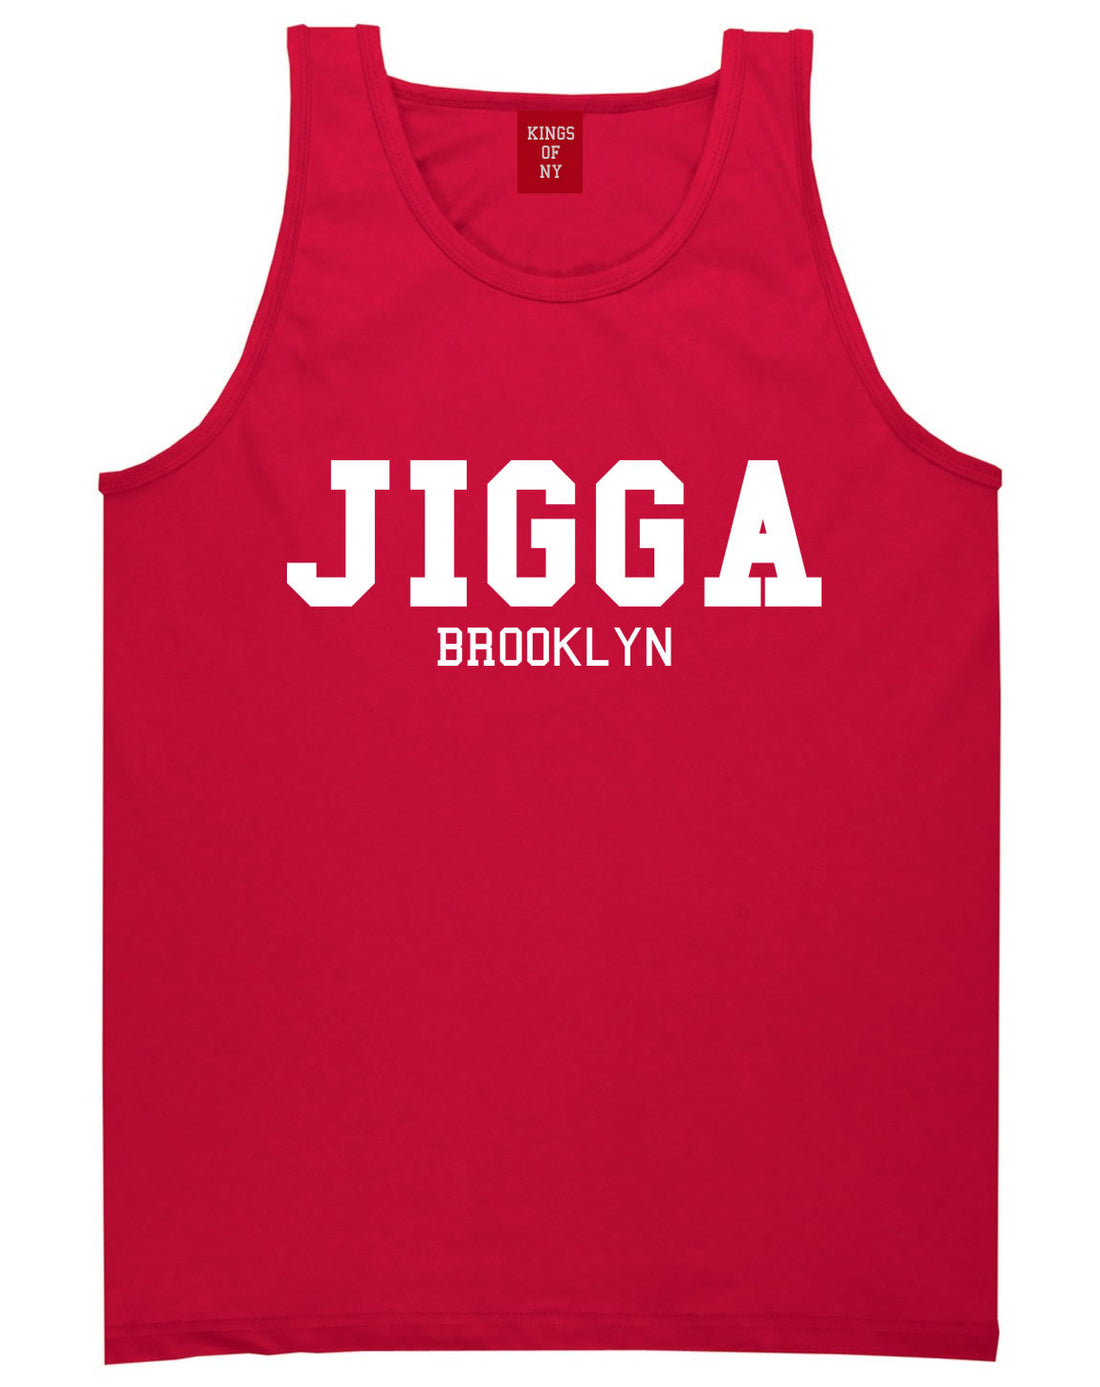 Jigga Brooklyn Tank Top in Red by Kings Of NY